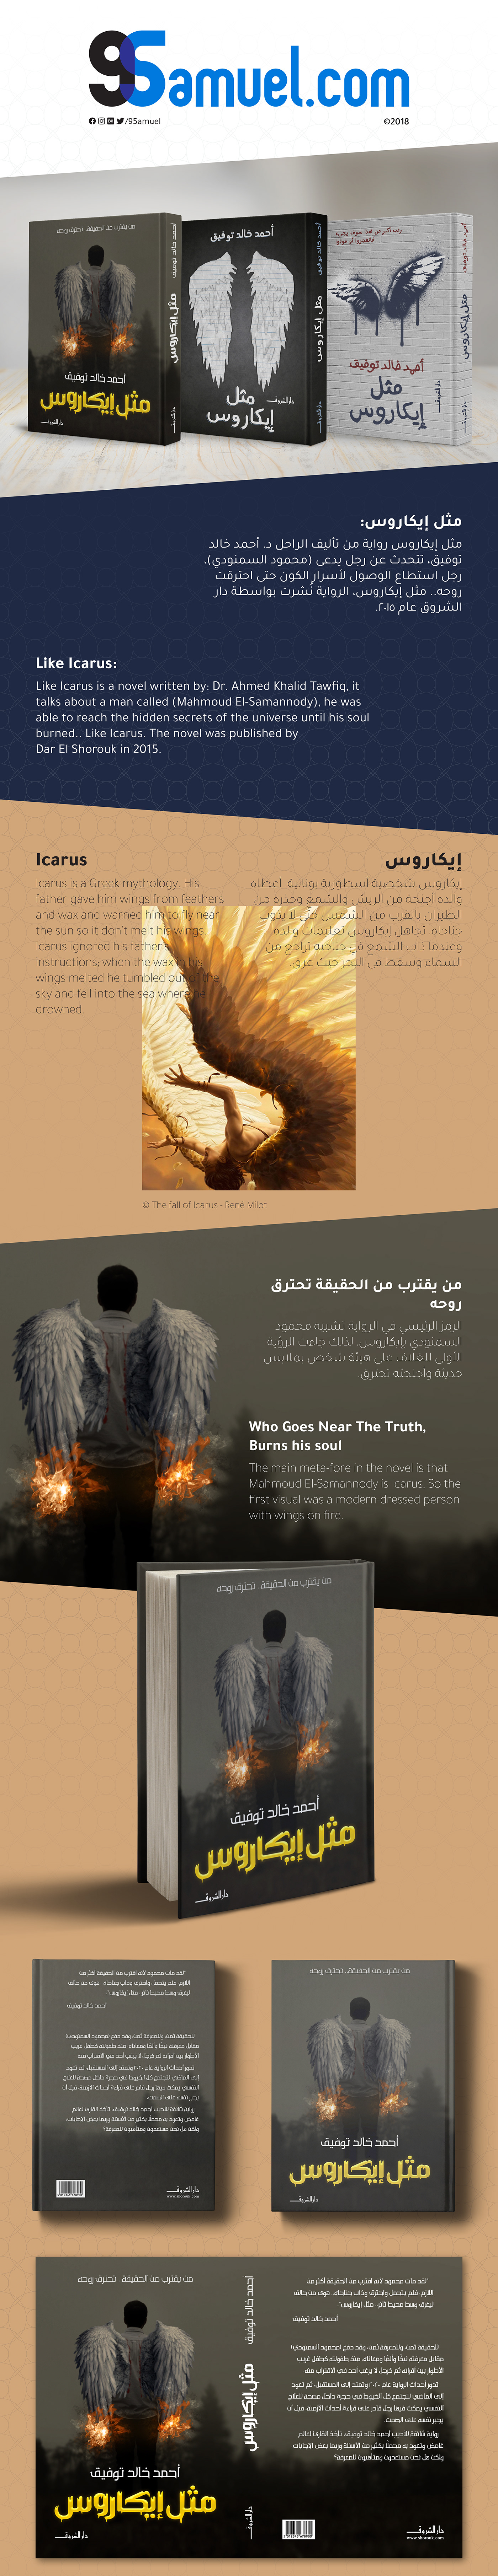 novel cover book ahmed khalid tawfiq Icarus Like رواية مثل إيكاروس أحمد خالد توفيق دار الشروق